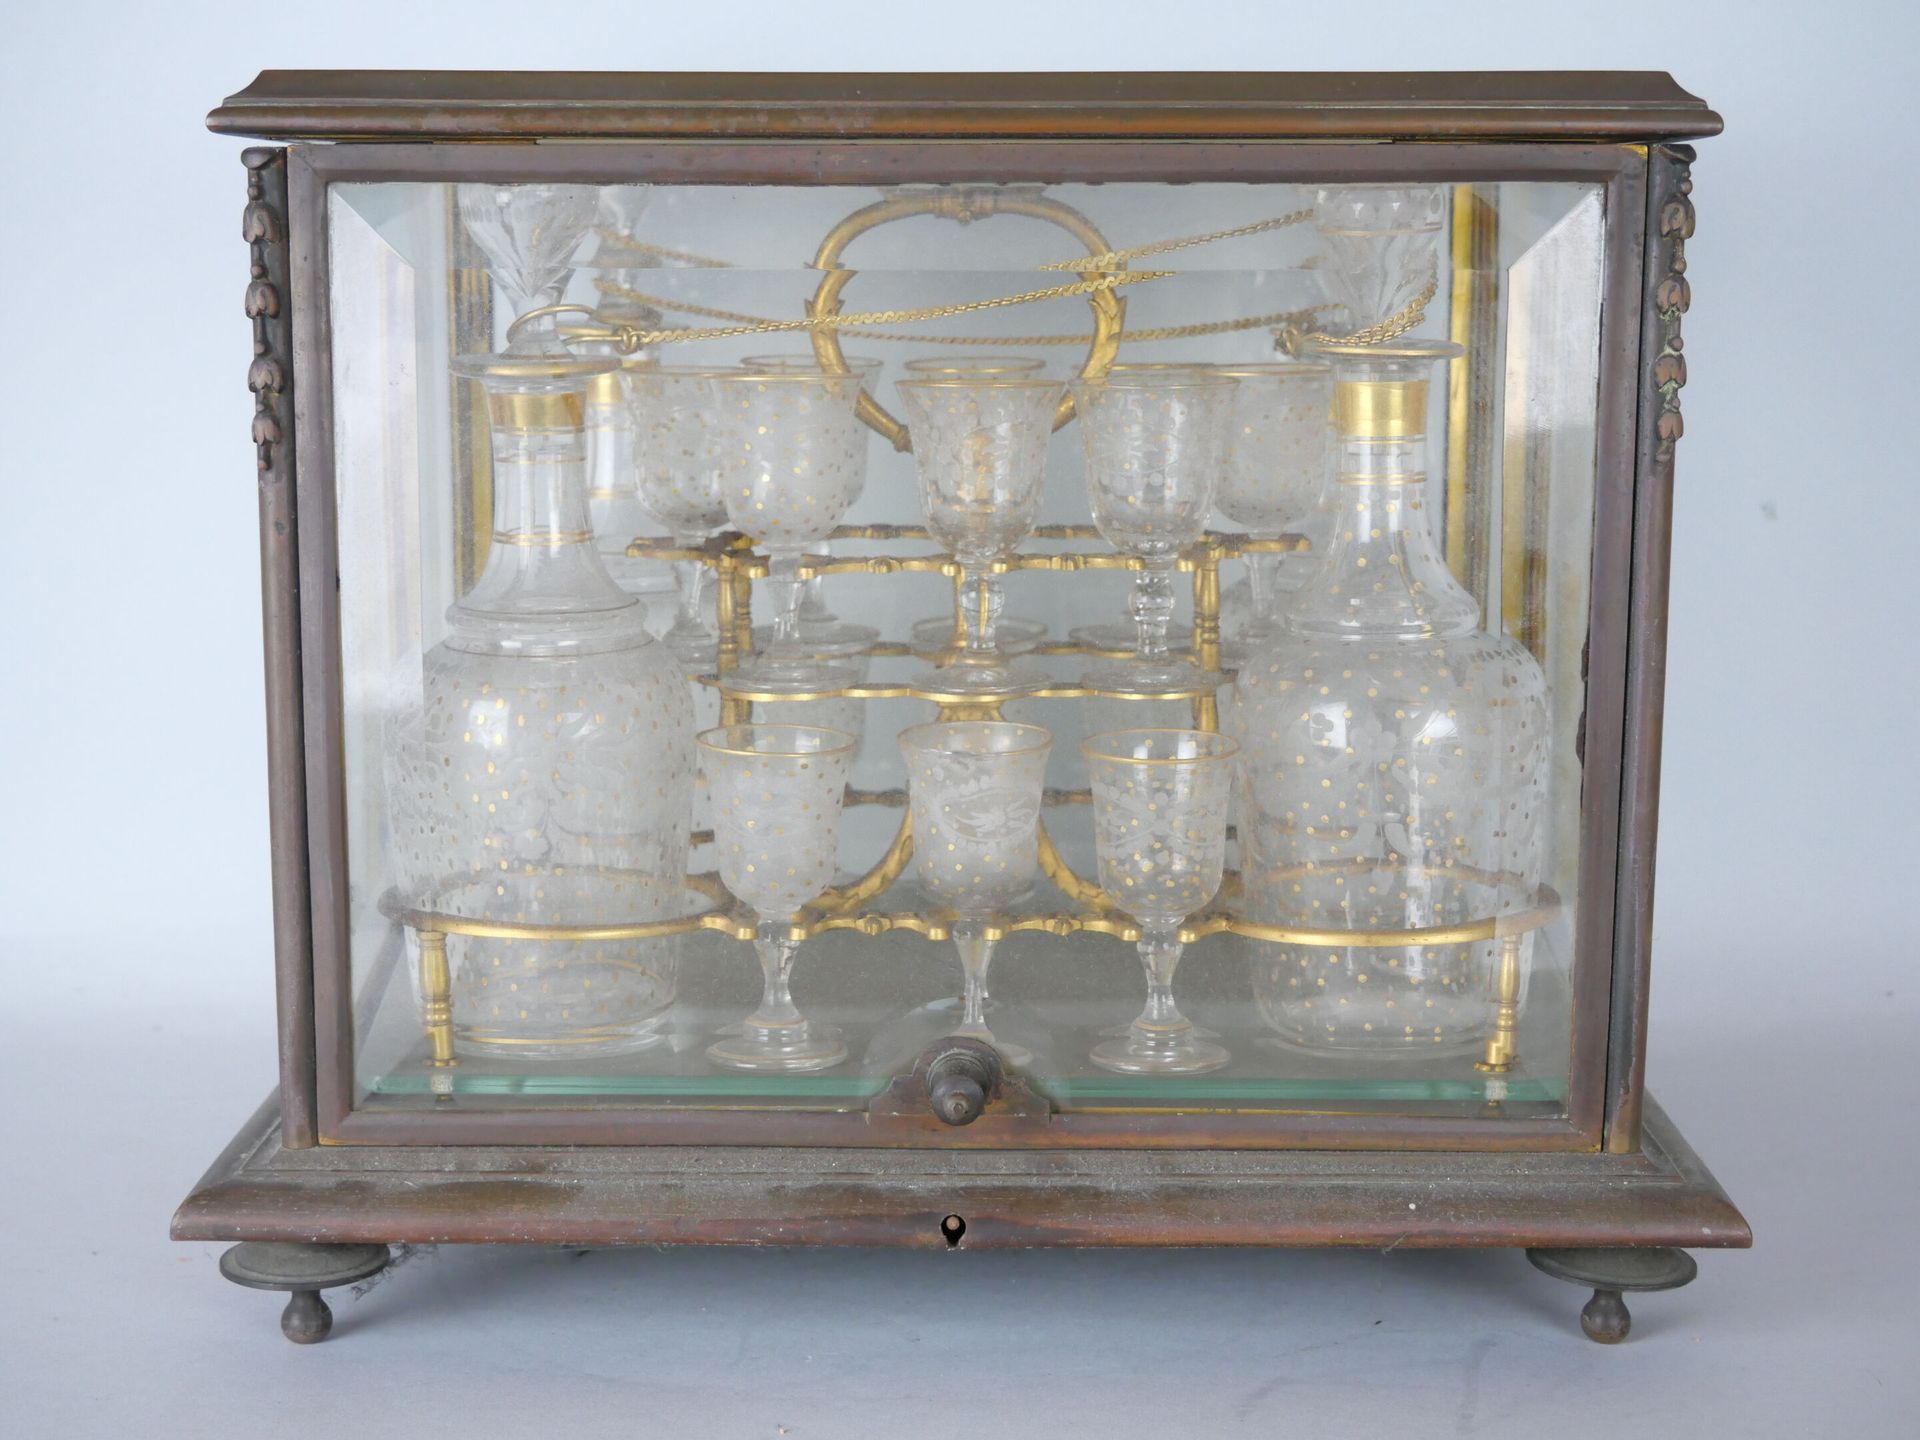 Null 利口酒柜，斜面玻璃和铜制的笼子里有4个带瓶塞的酒瓶，16个玻璃杯放在刻有花环和镀金点的水晶基座上。

杯子的高度：8厘米

杯子的高度：20厘米

笼&hellip;